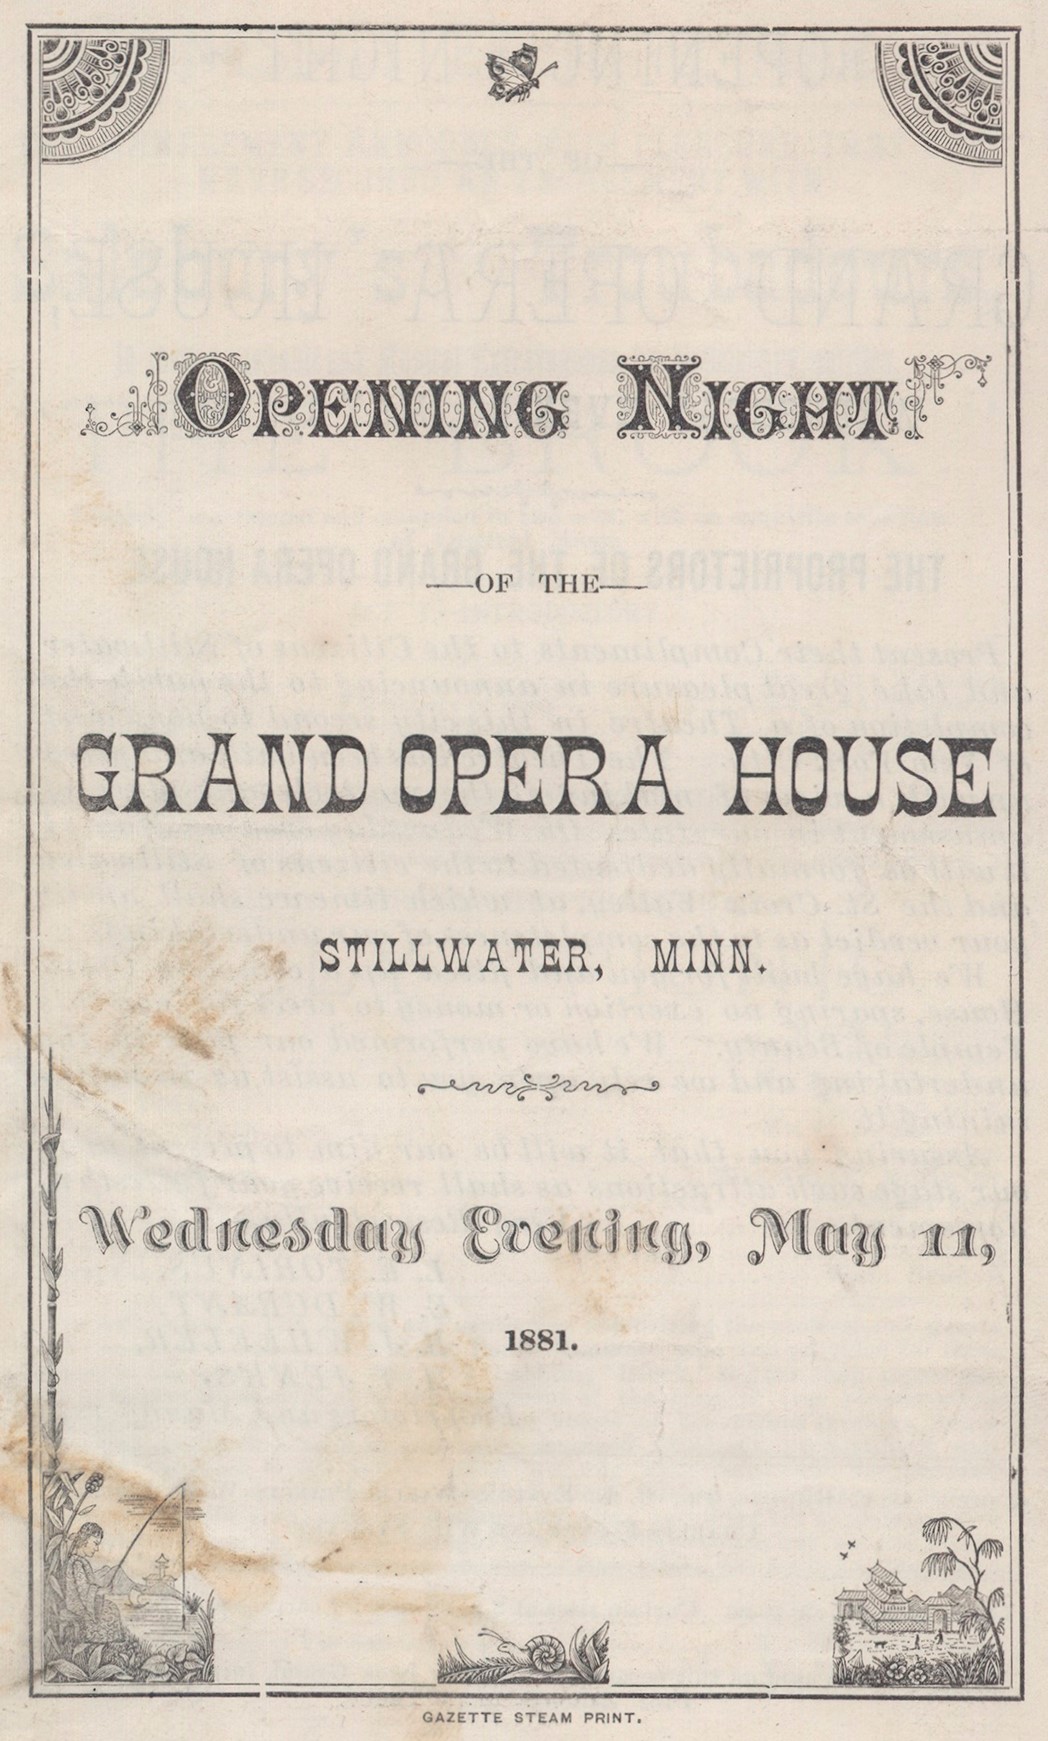 Opera house opening night program